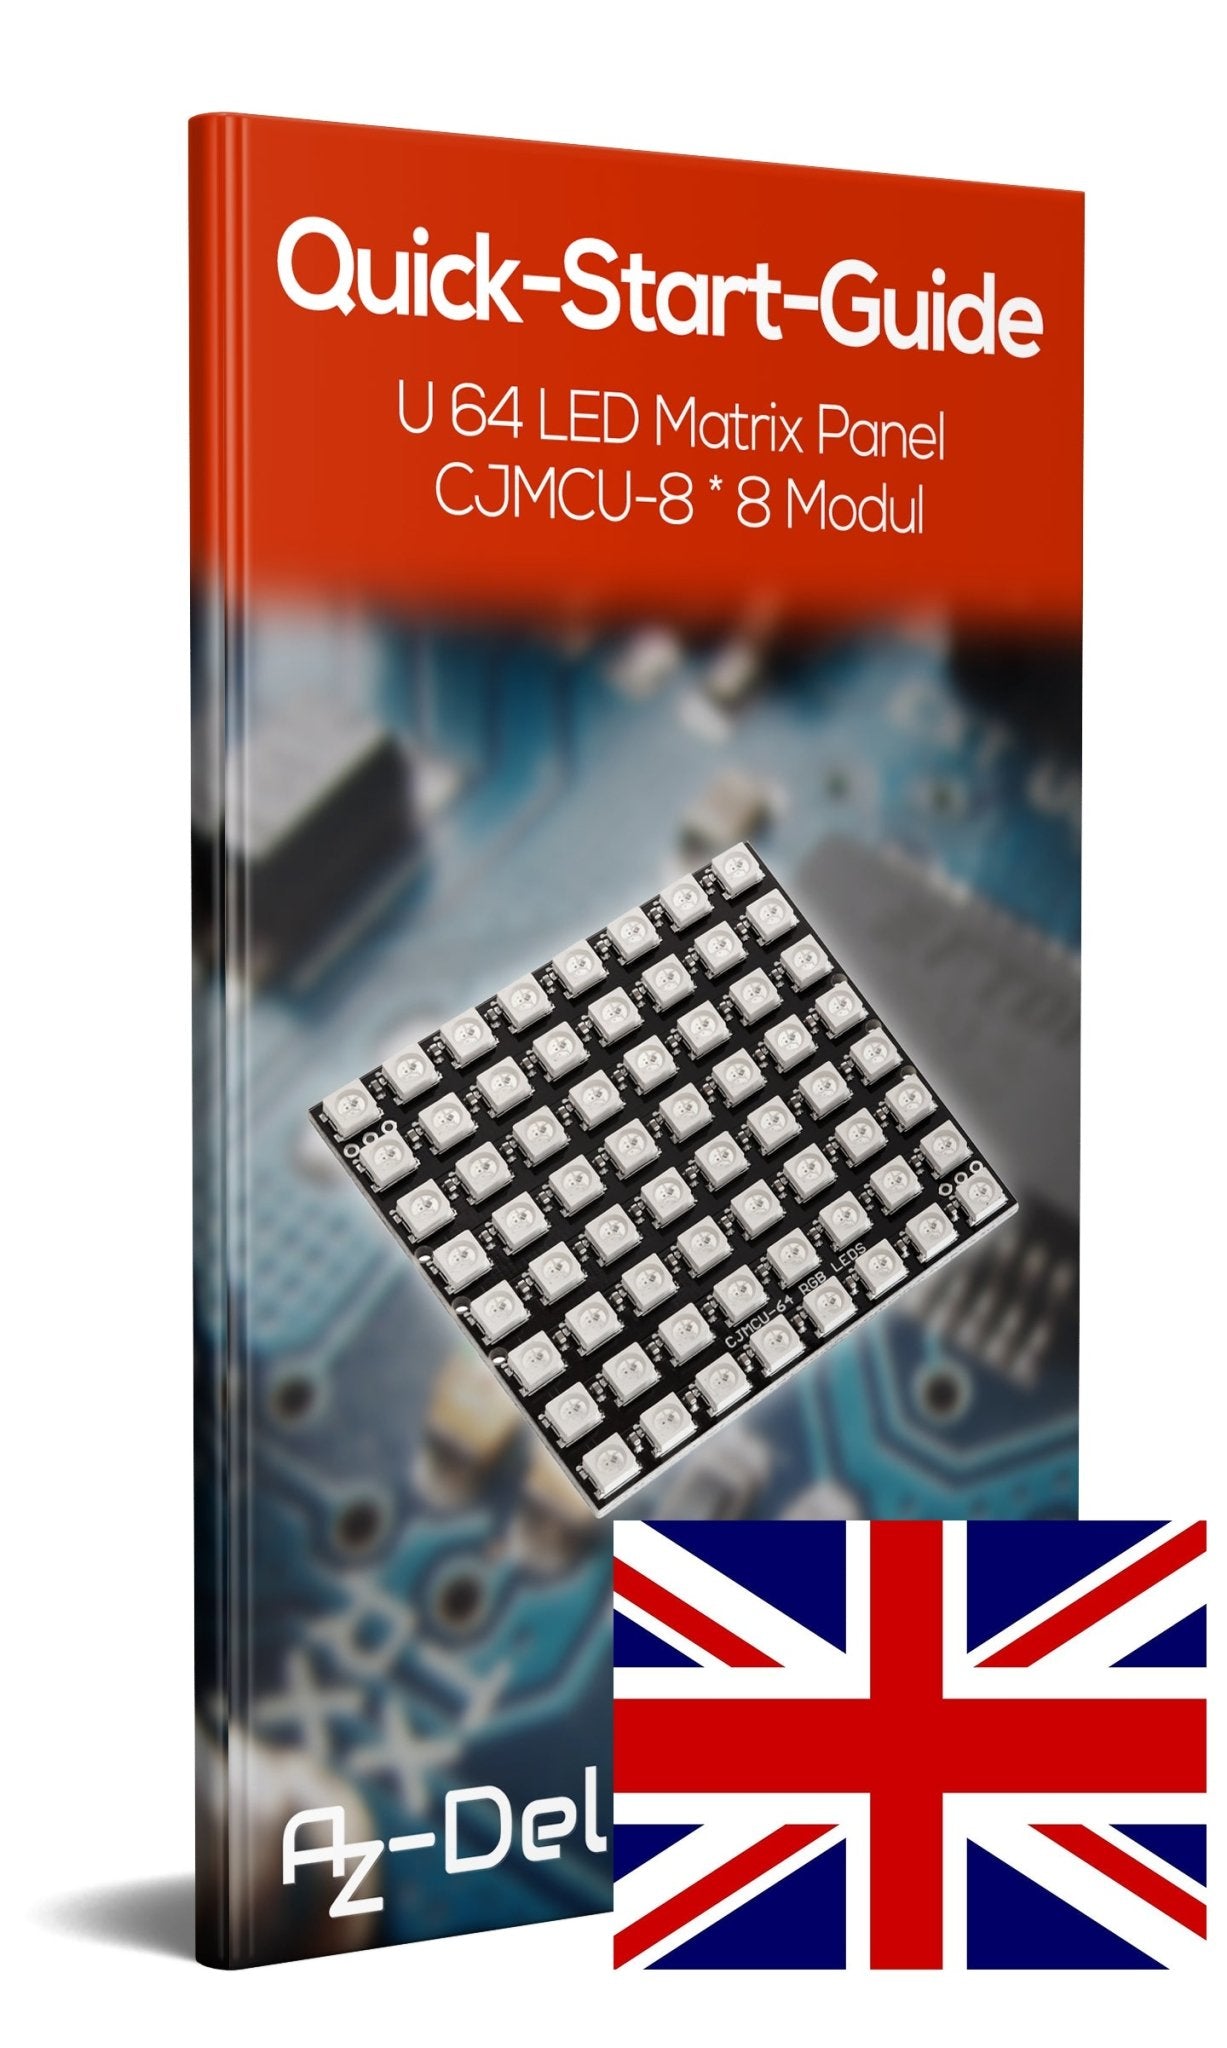 U 64 LED Matrix Panel CJMCU-8x8 Modul für Raspberry Pi - AZ-Delivery